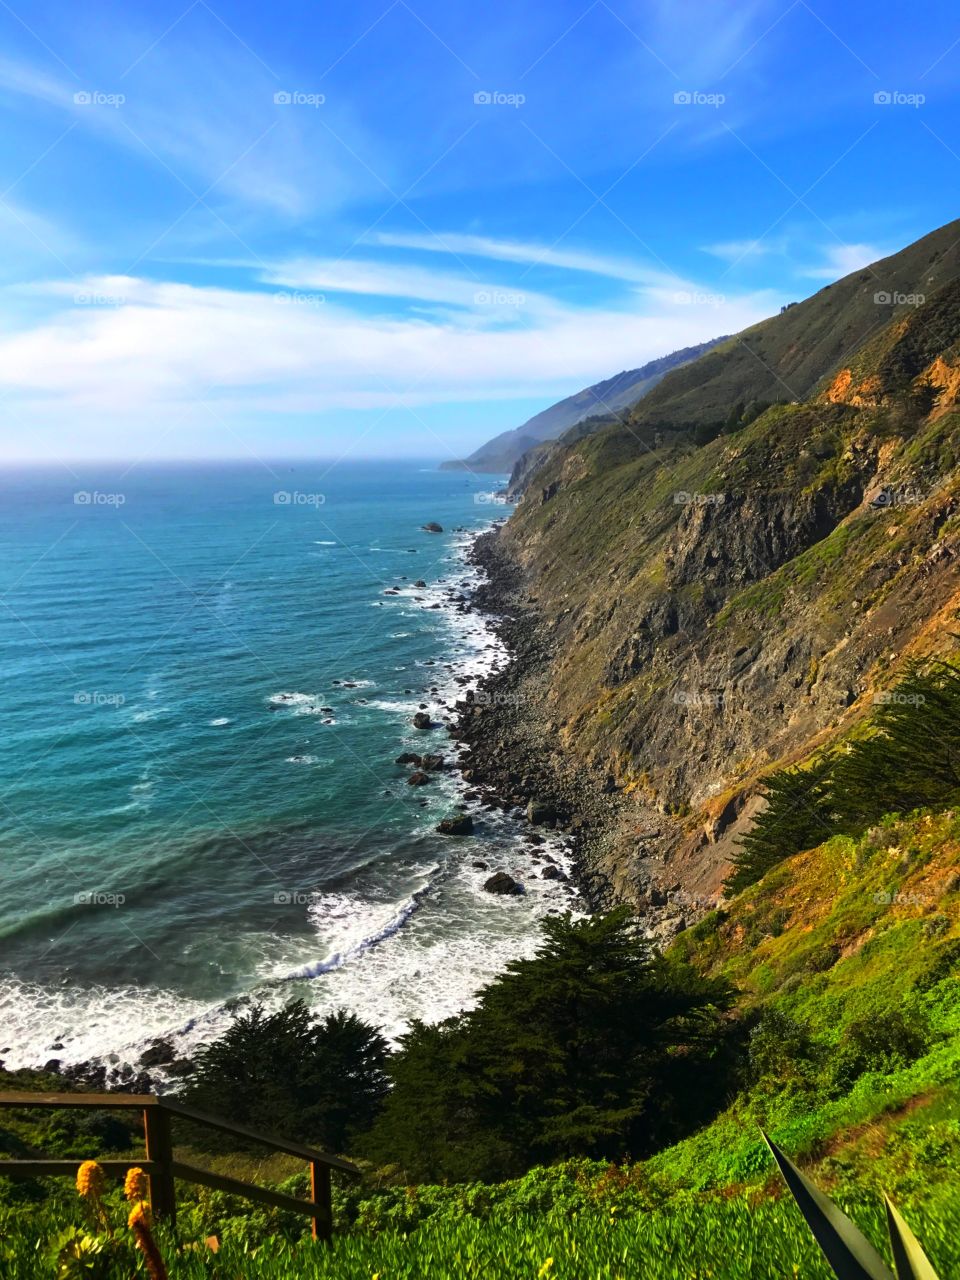 California, beautiful, coast, ocean, shore, scenery, landscape, big sur, highway 1